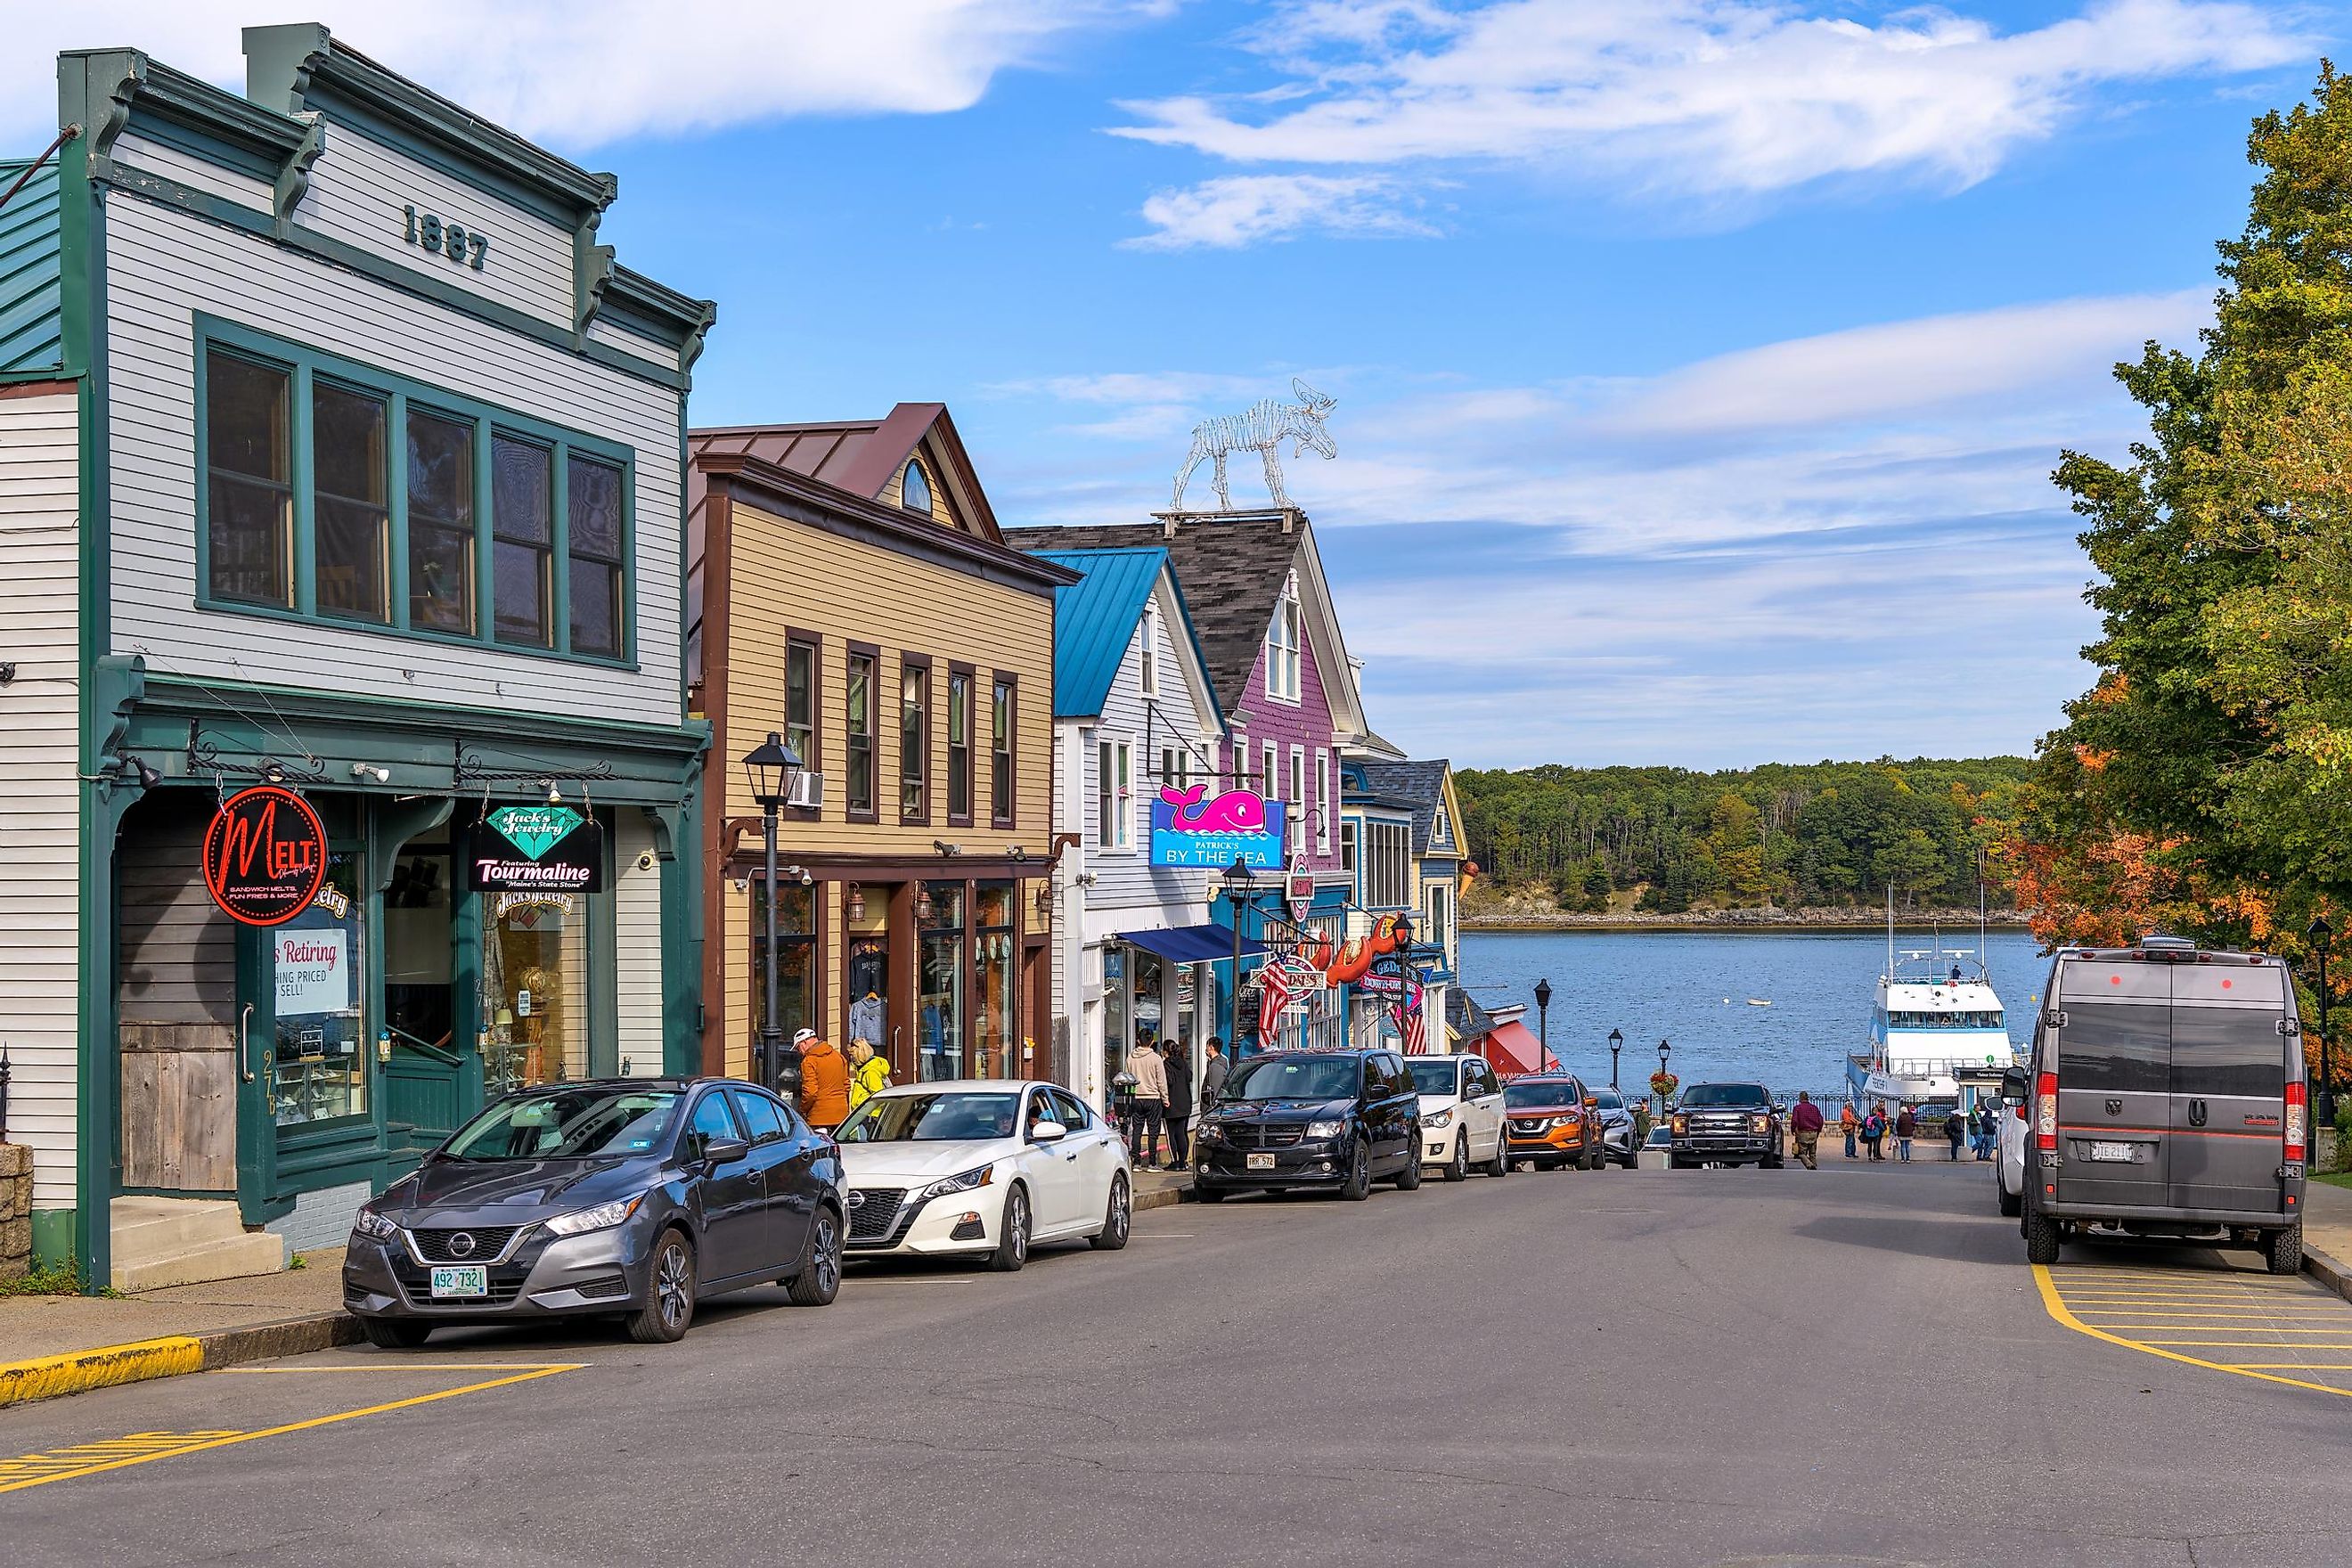 Historic Main Street of Bar Harbor, Maine. Image credit Sean Xu via Shutterstock.com